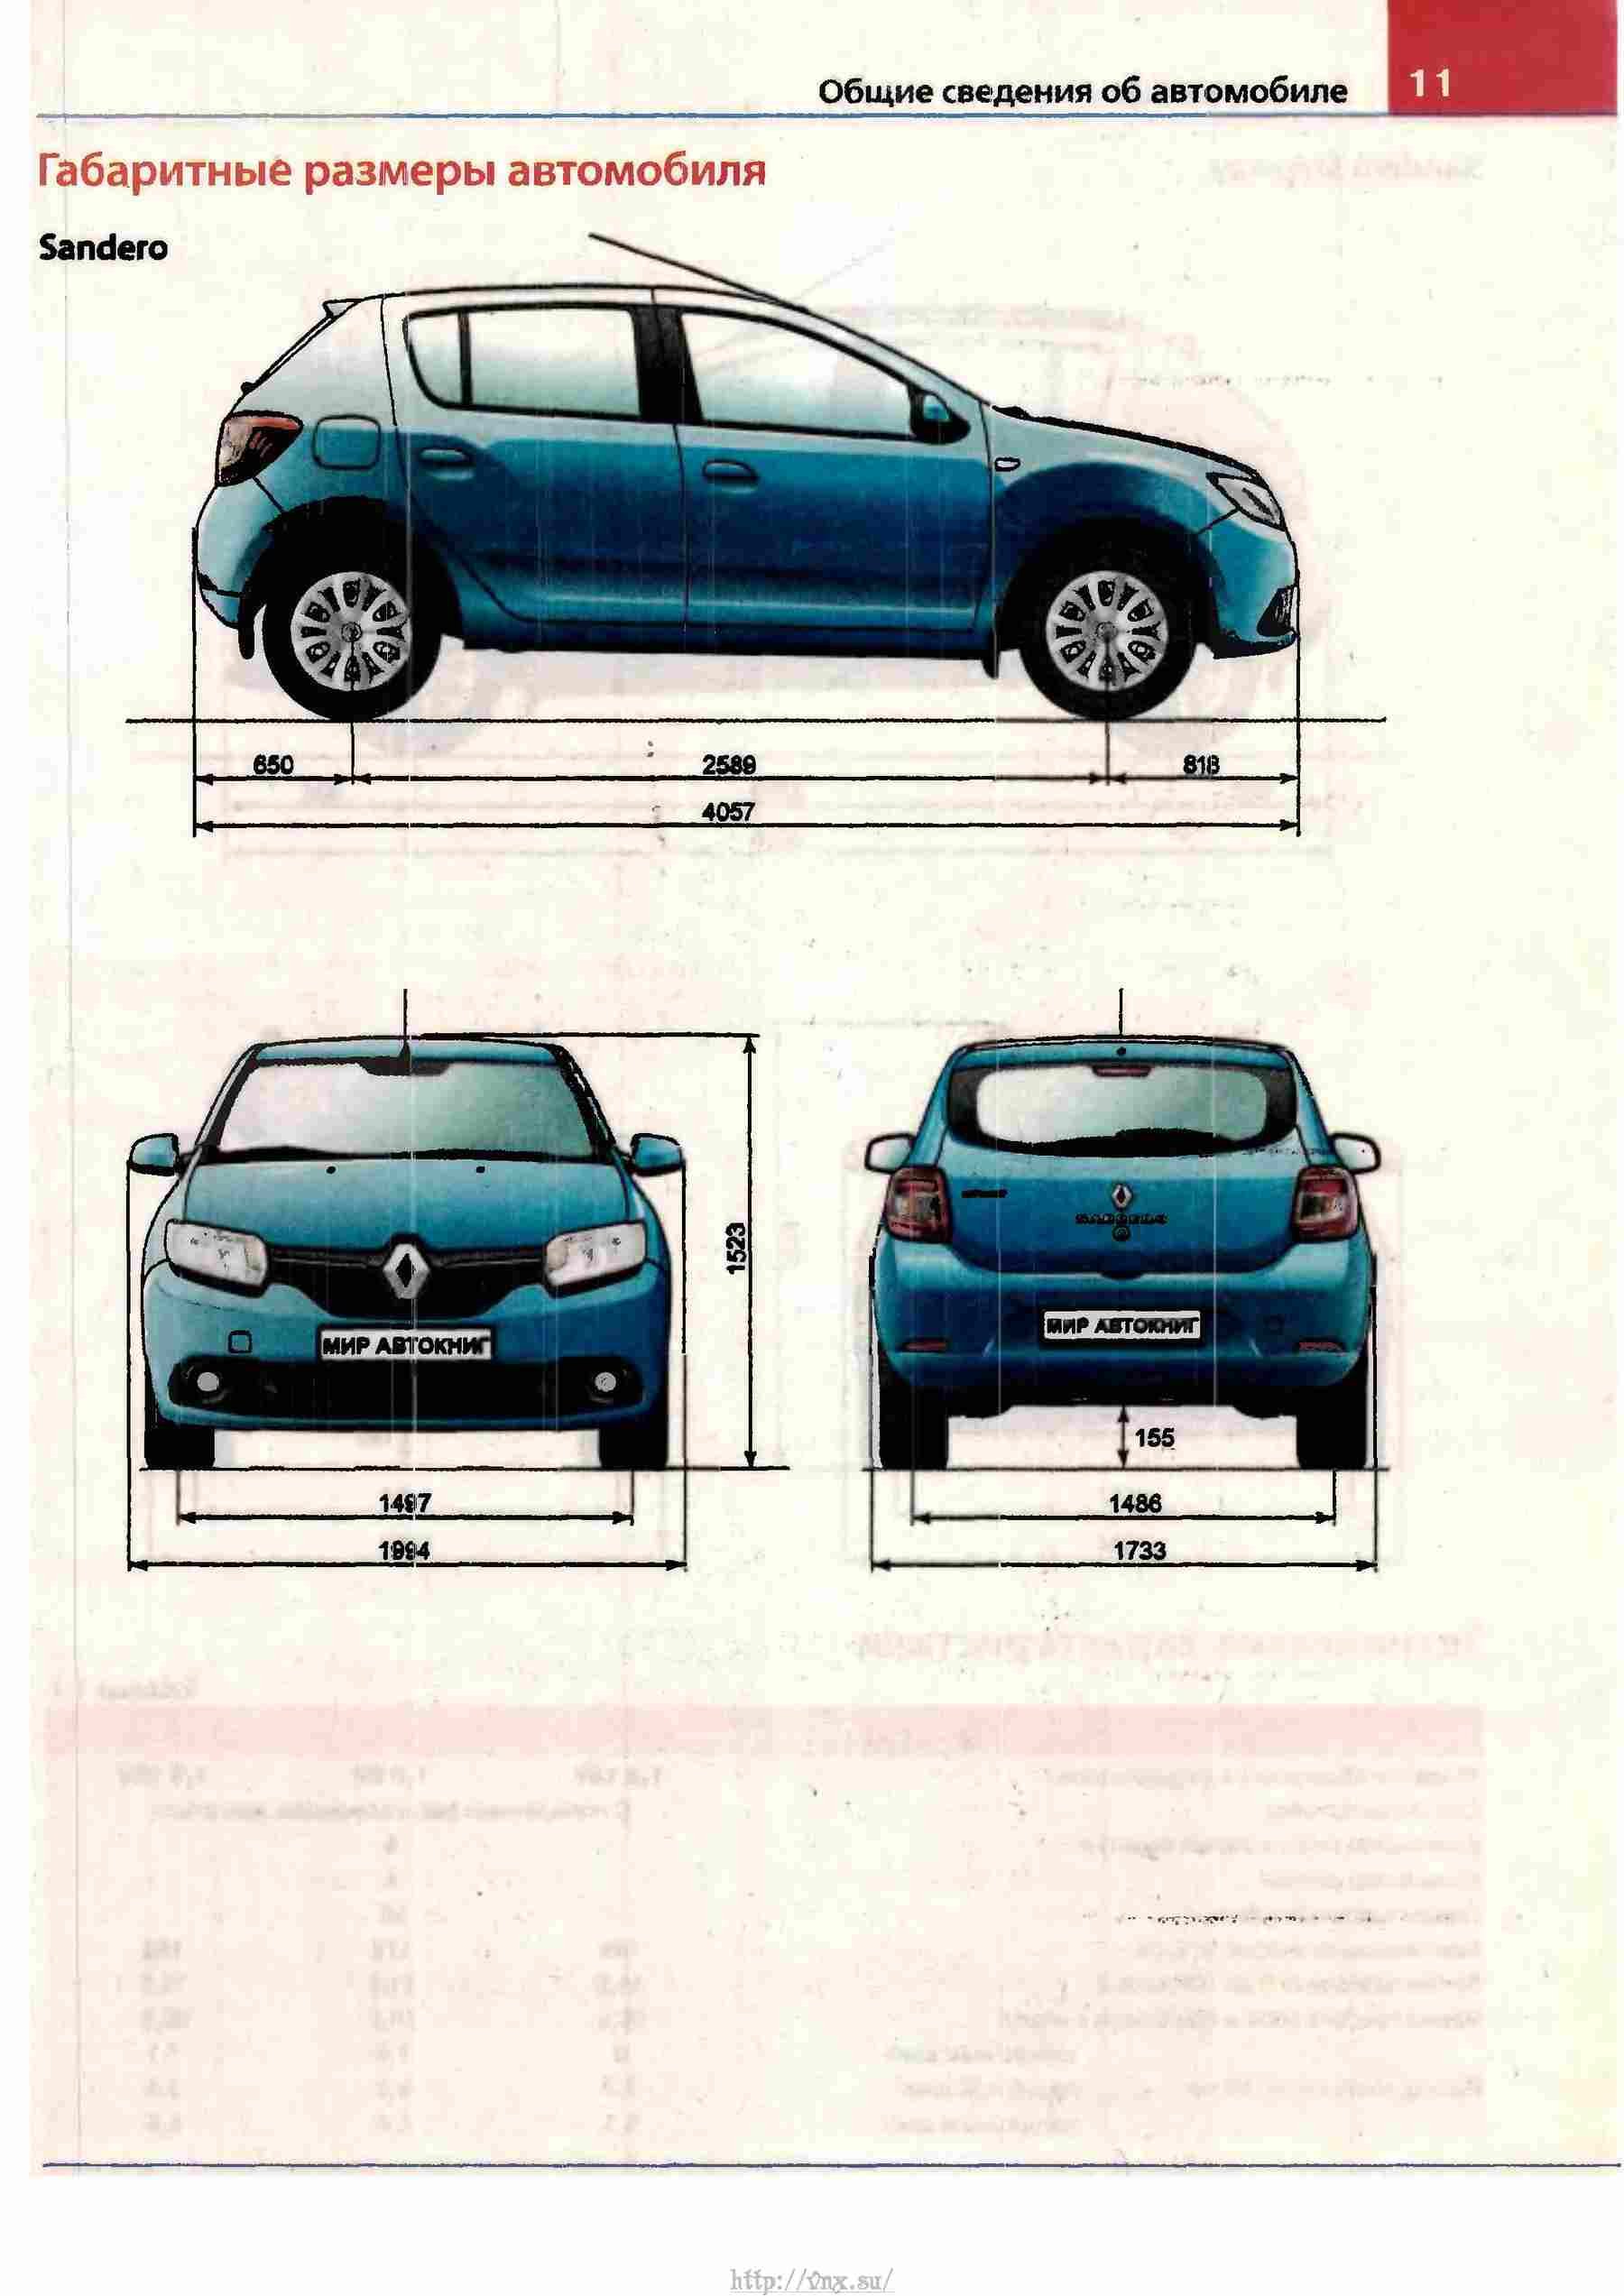 Sandero stepway размеры. Renault Sandero Stepway II габариты. Габариты Рено Сандеро 2. Renault Sandero 2 габариты. Габариты Рено Логан 2.